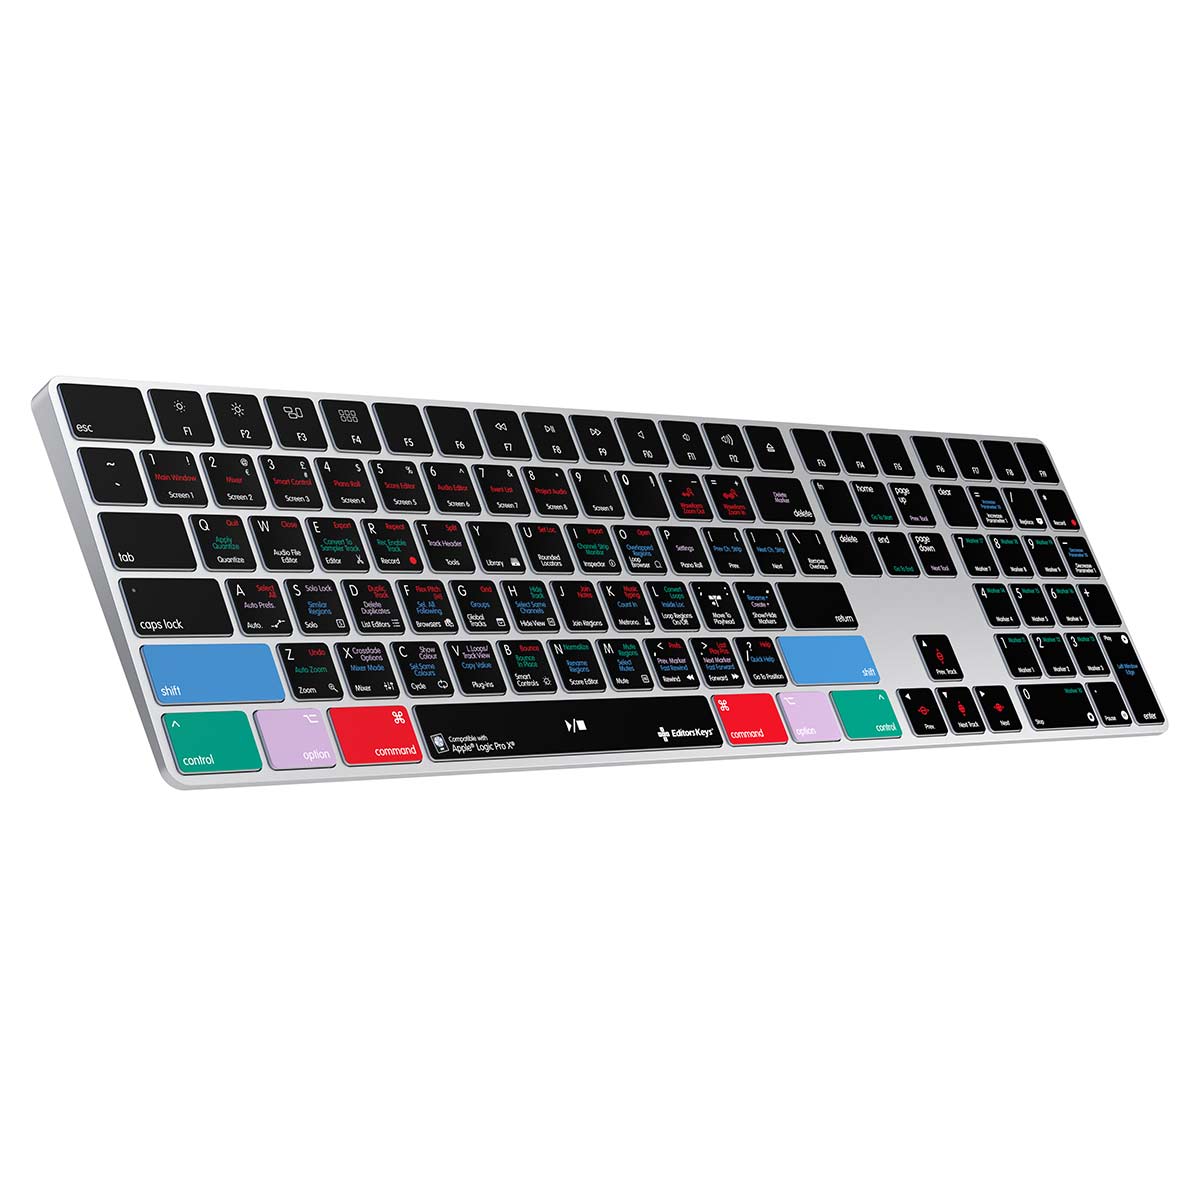 Genuine Apple Keyboard for Logic Pro X by Editors Keys USA Version